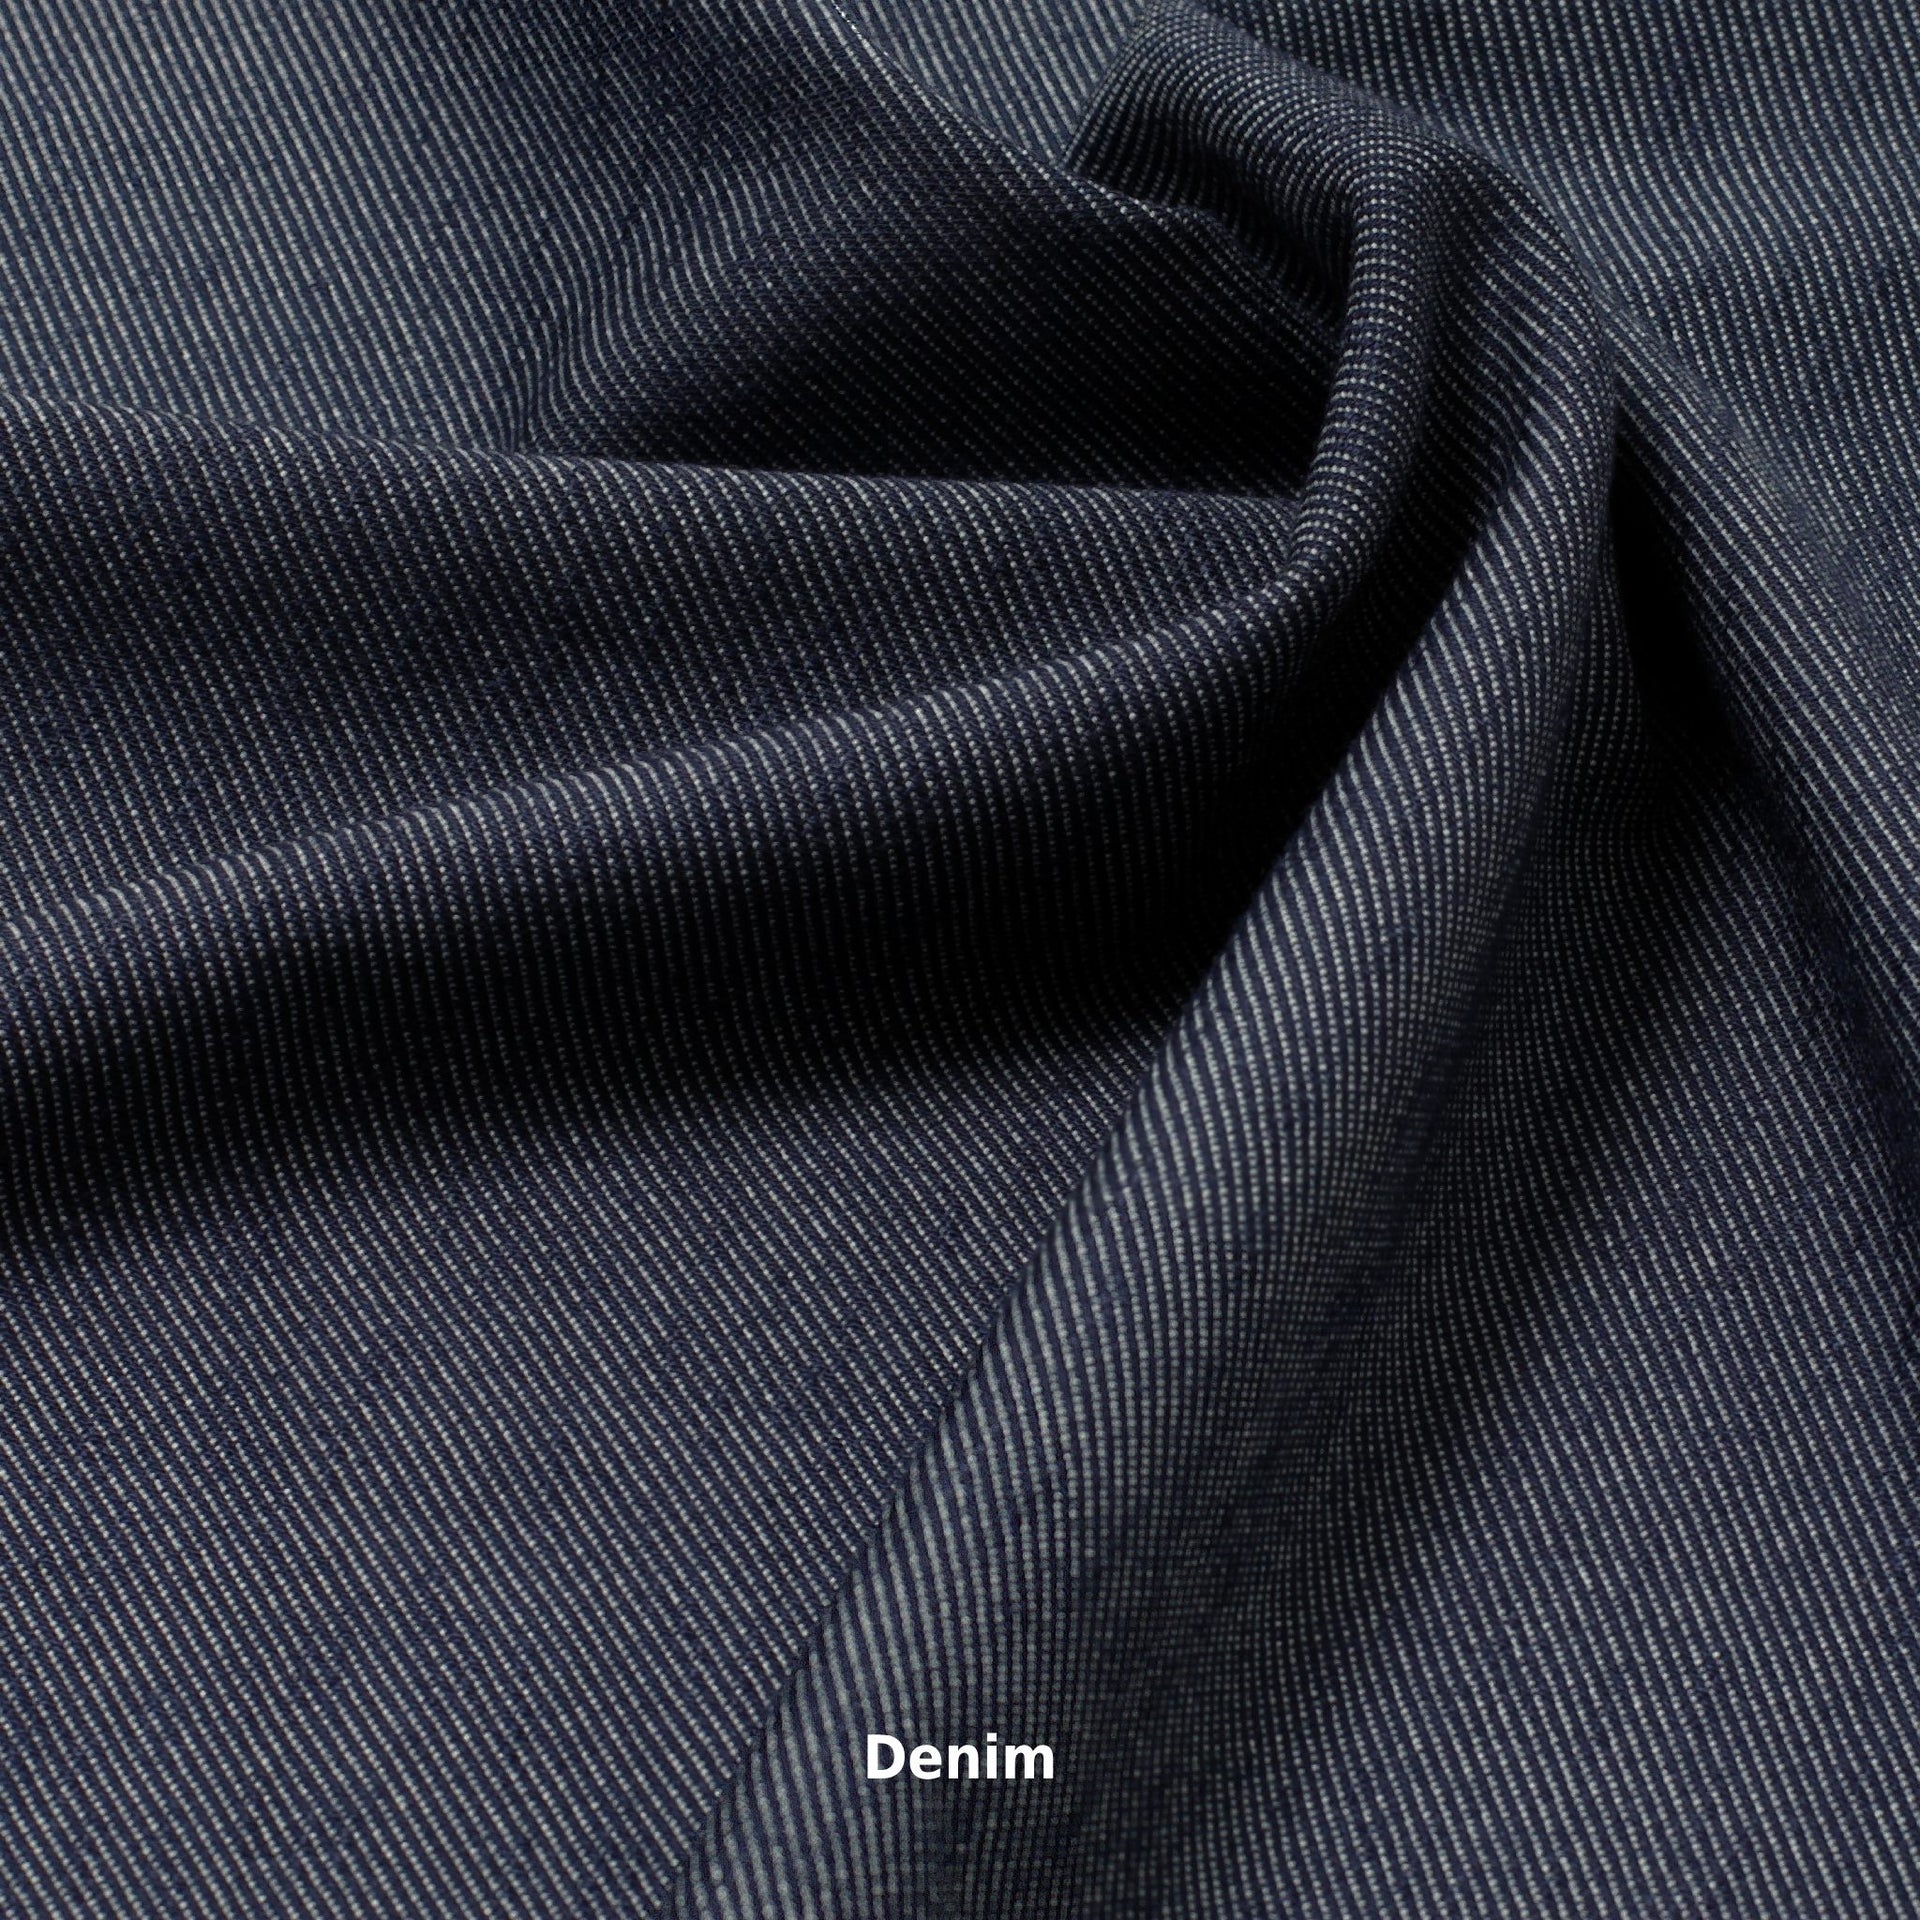 Knitted Denim Fabric - Sulphur Knitted Denim Fabric Manufacturer